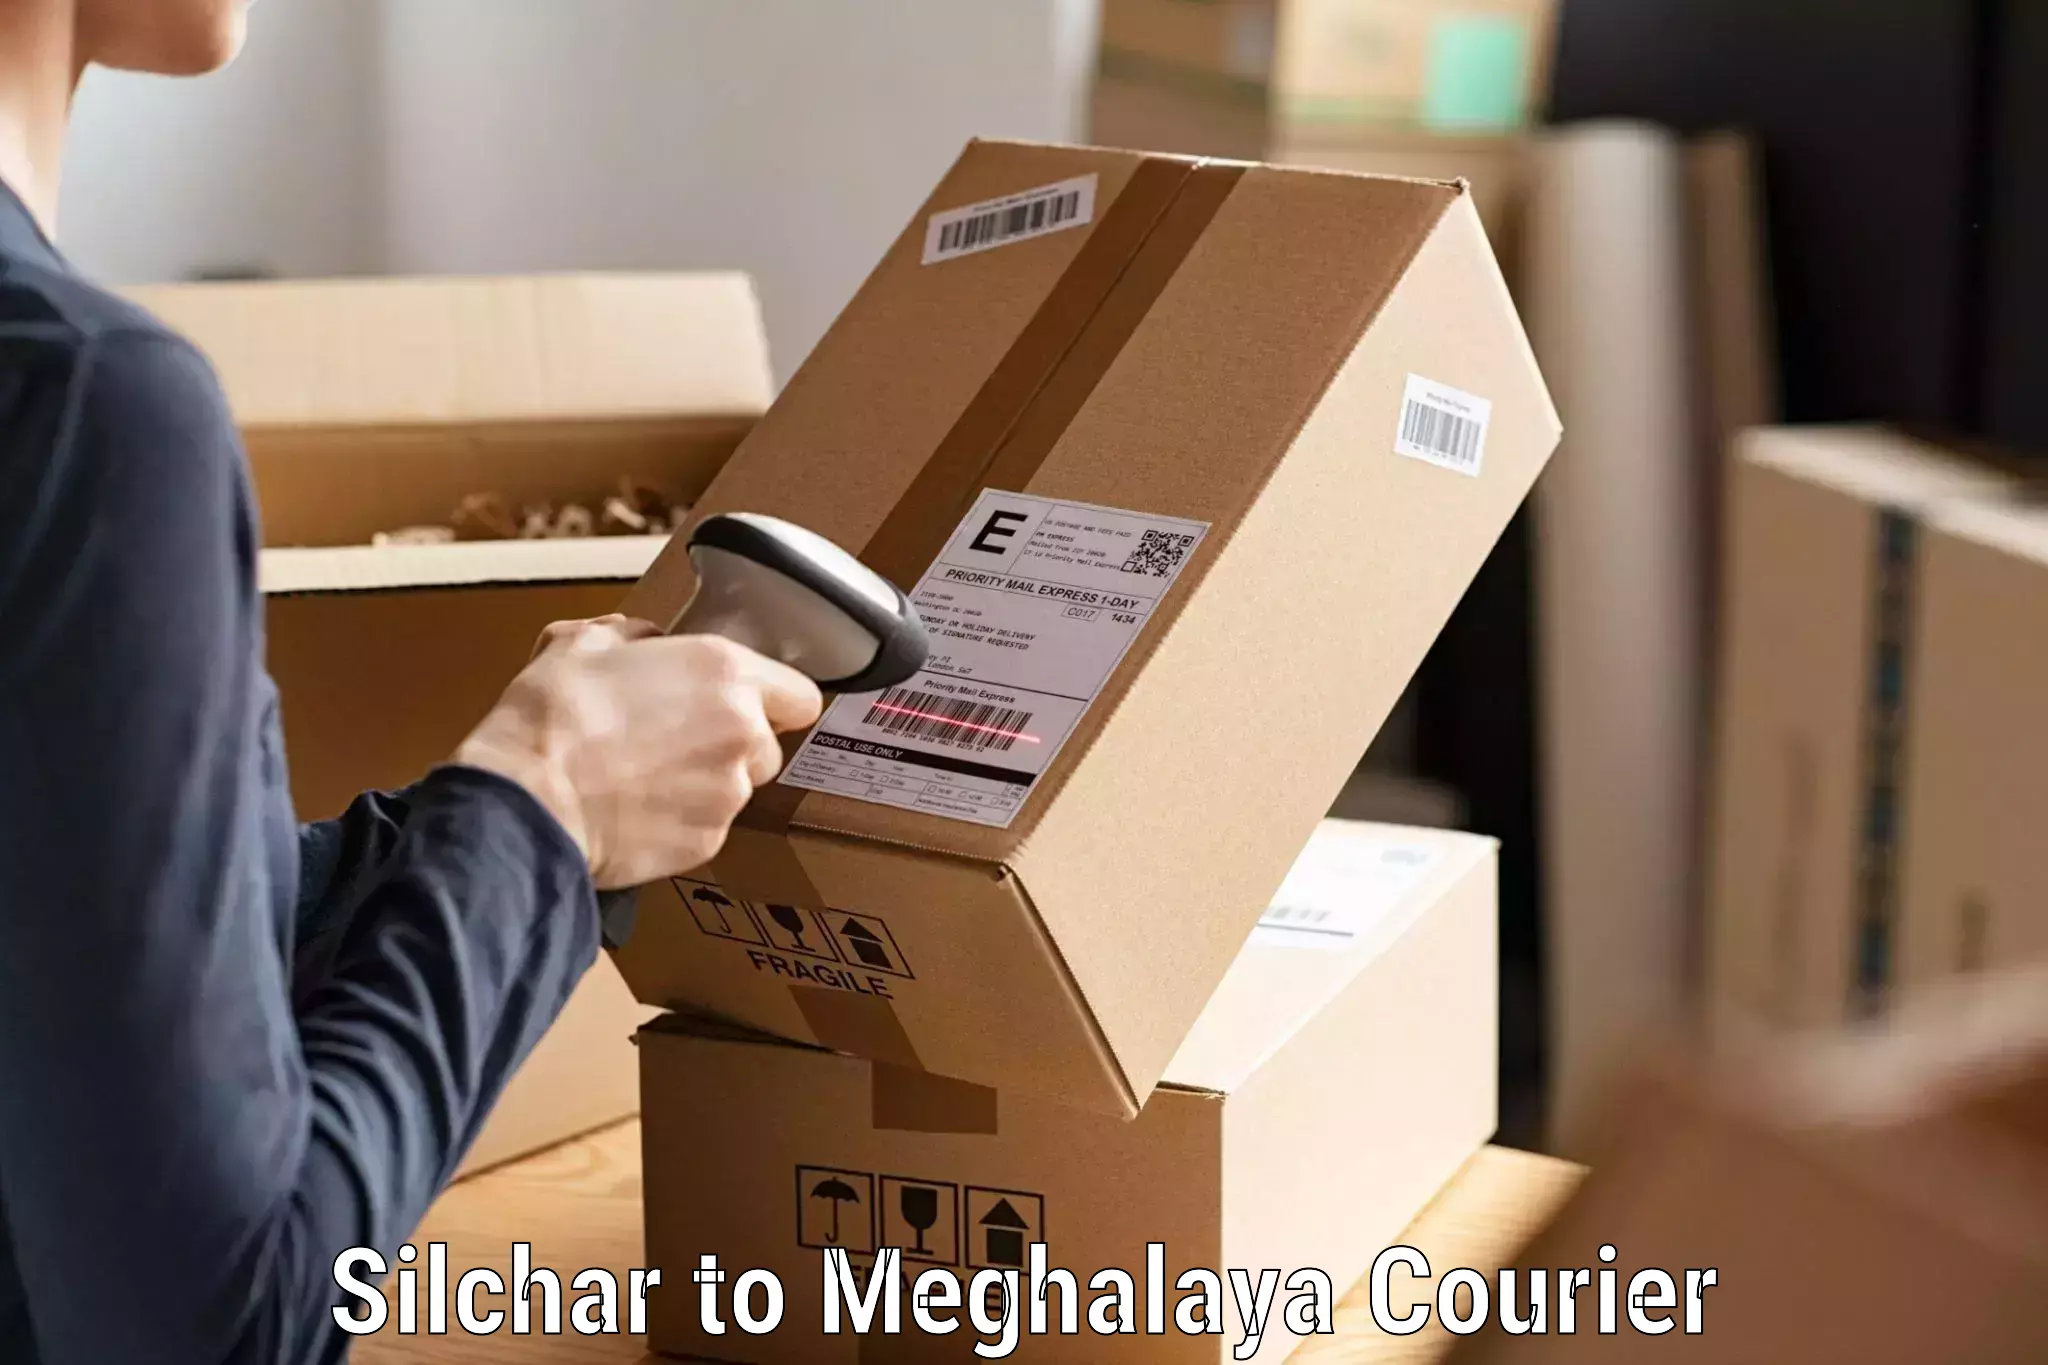 Fast delivery service Silchar to Cherrapunji